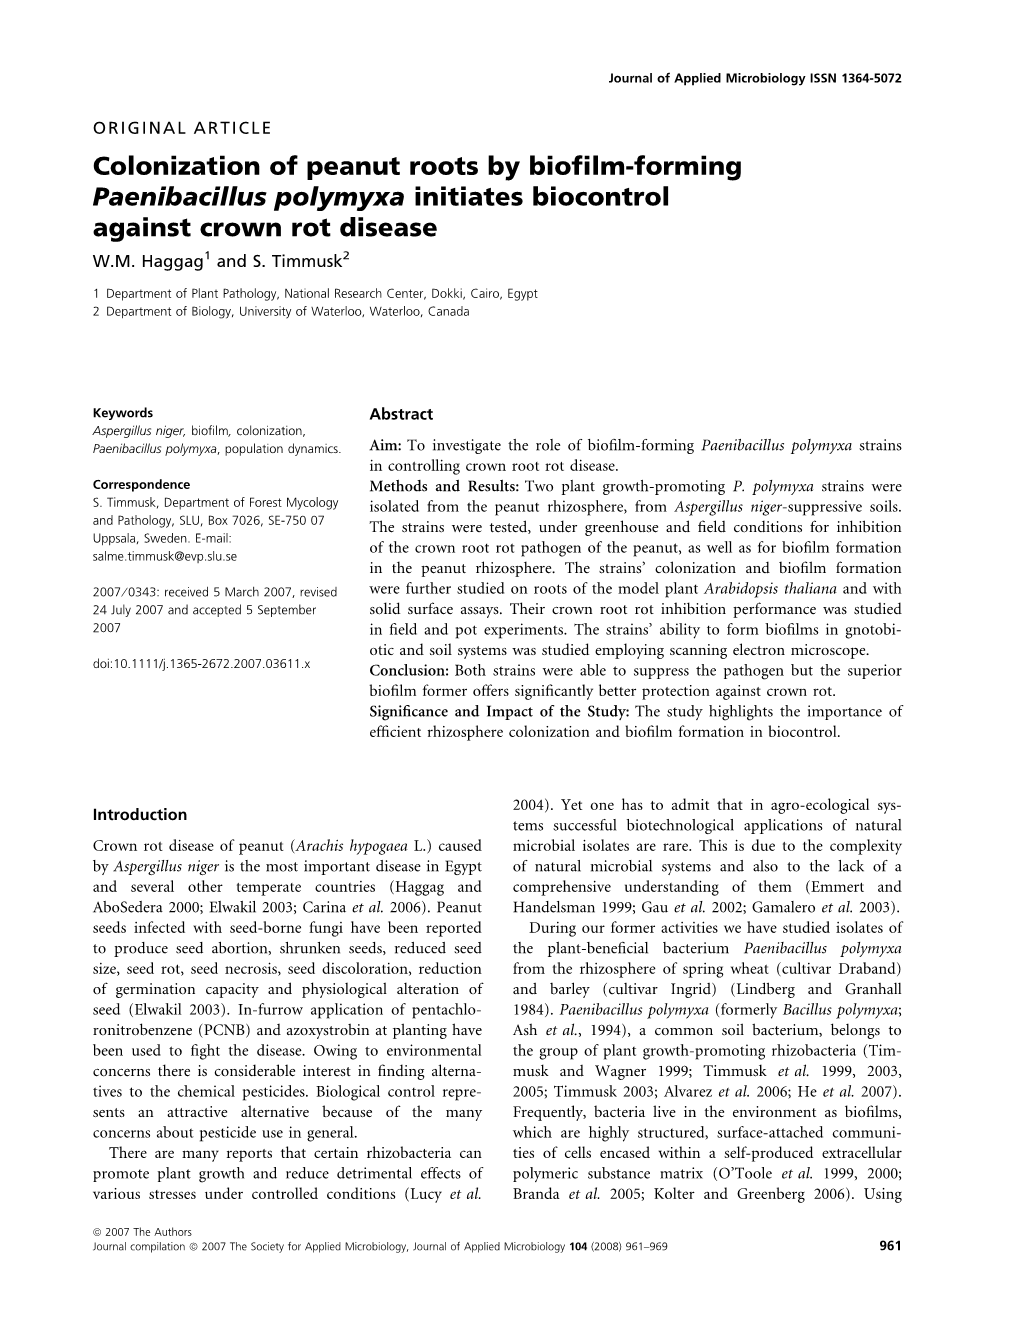 Paenibacillus Polymyxa Initiates Biocontrol Against Crown Rot Disease W.M